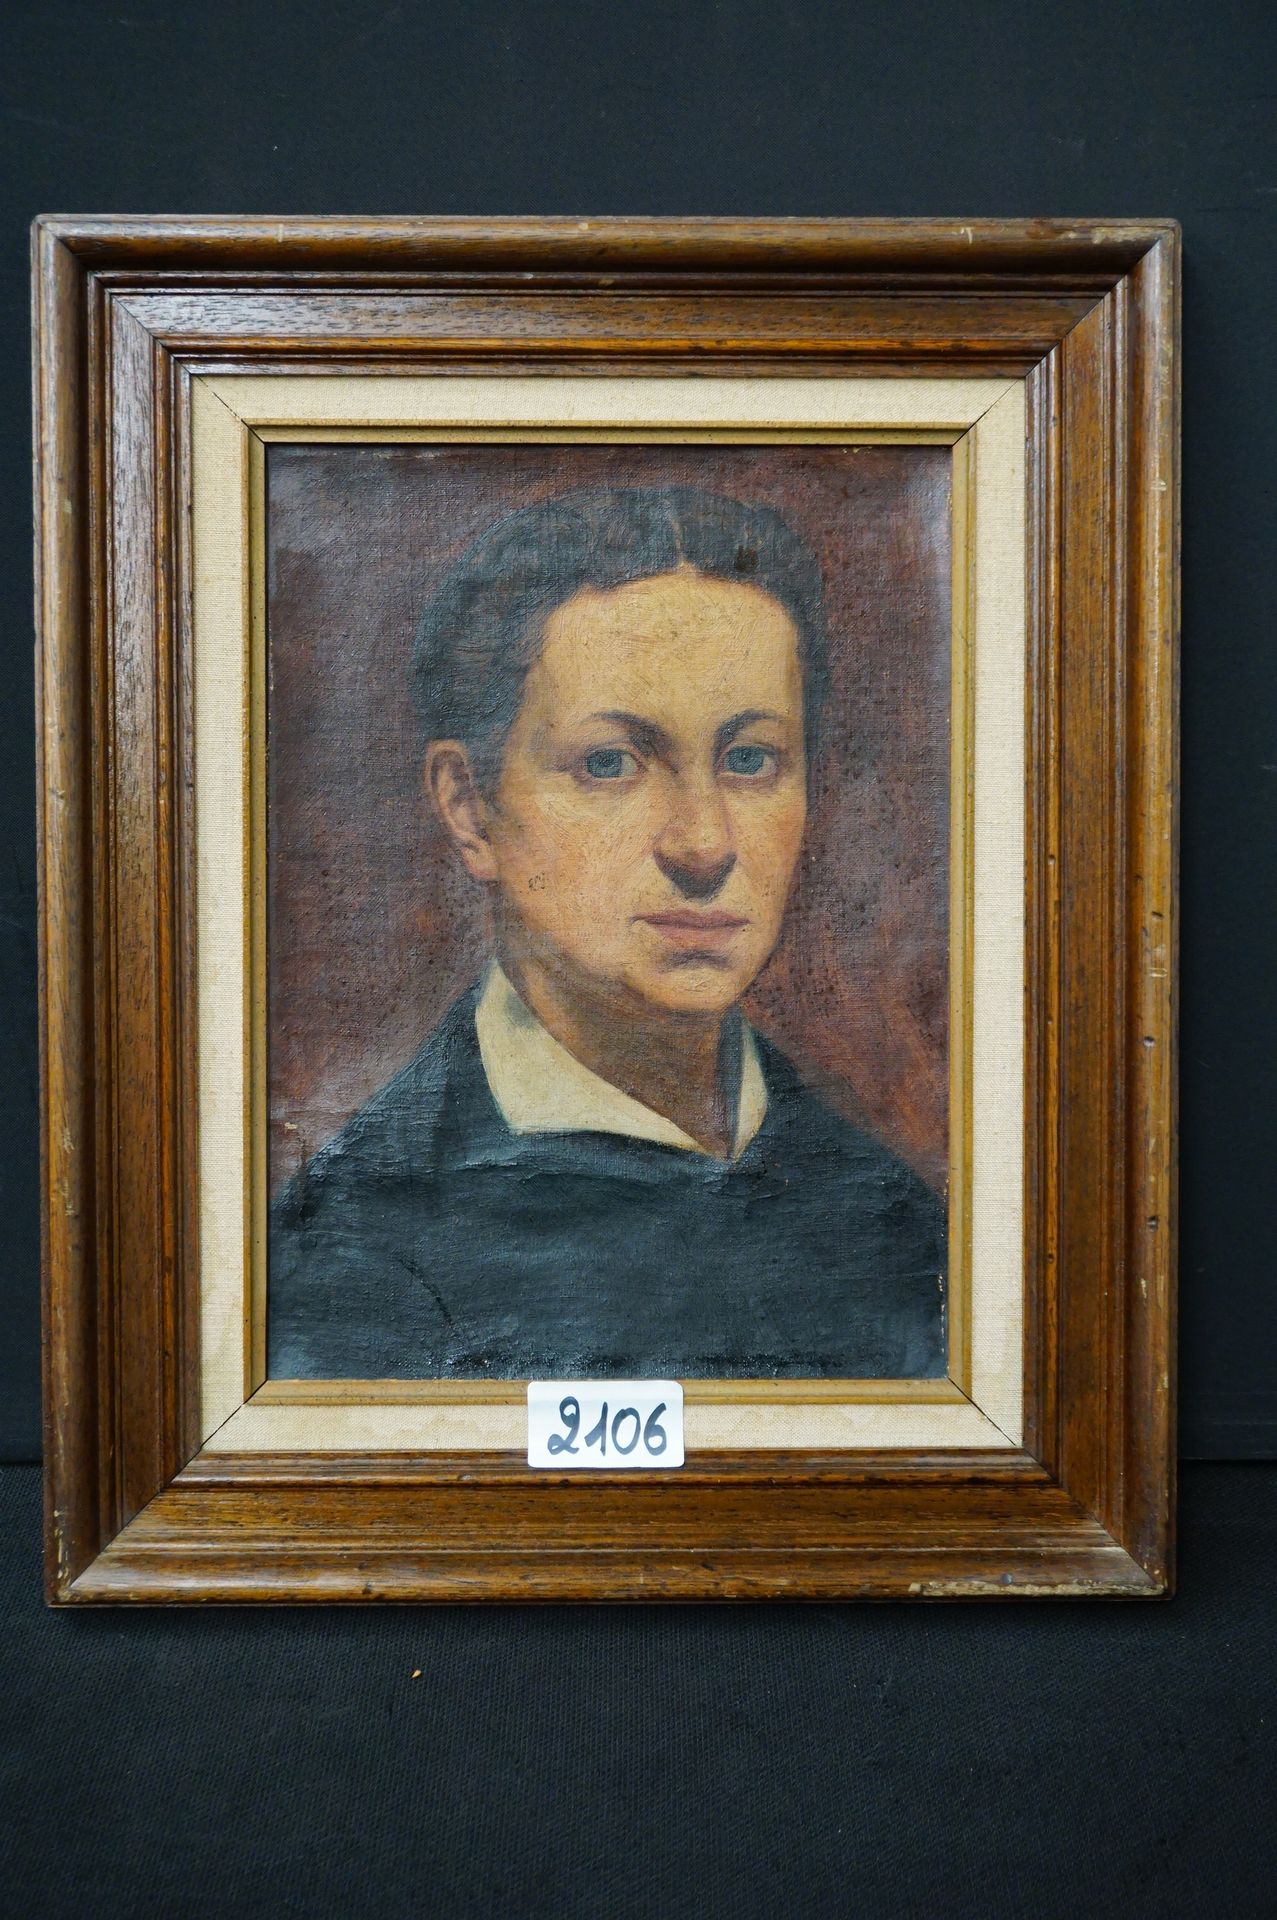 Null Painting - "Ladies portrait" - Oil on canvas - 40 x 30 cm